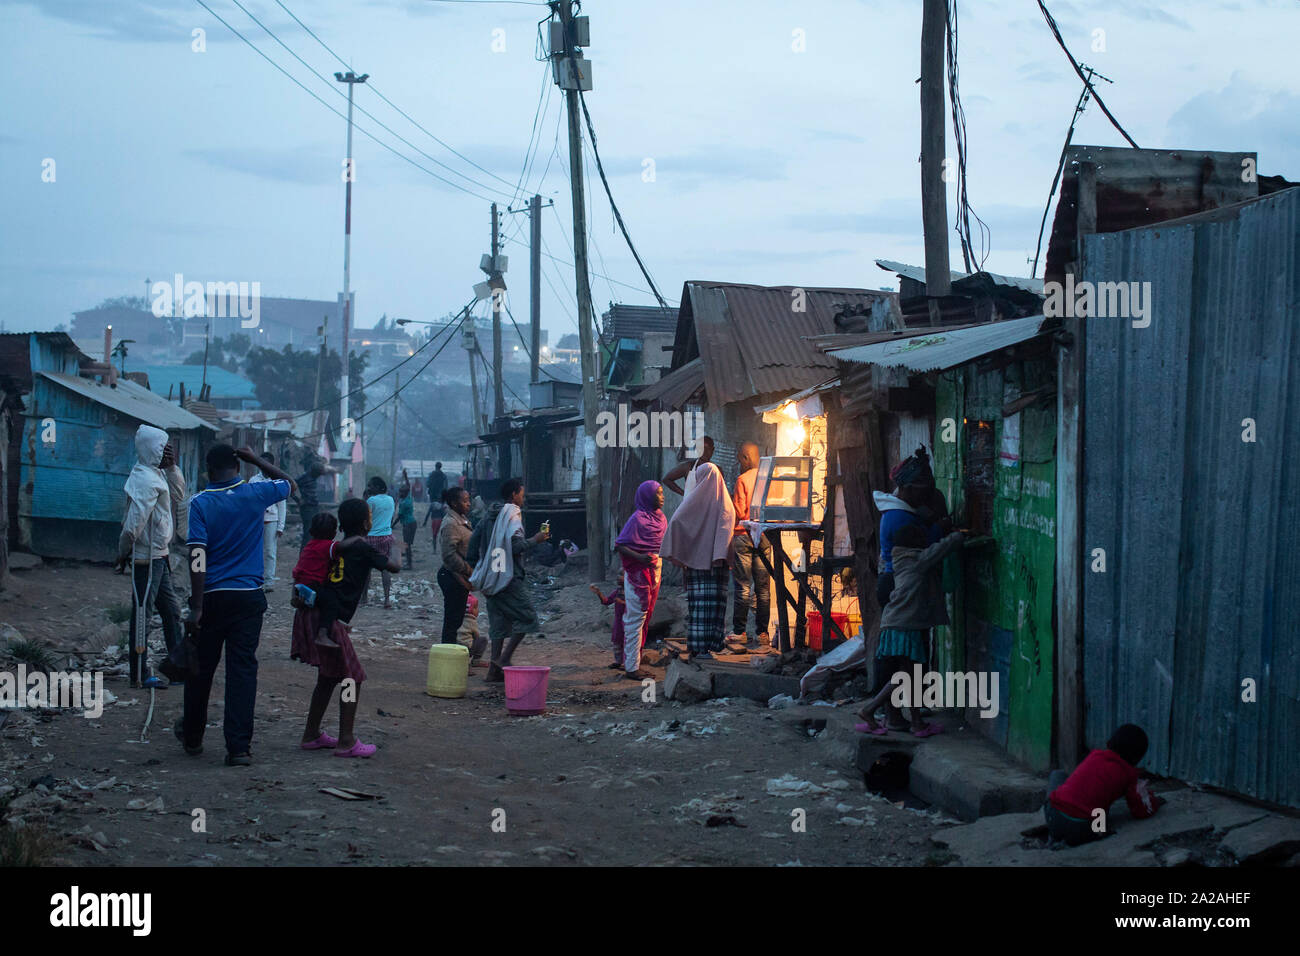 Residents queue to buy food from a kiosk in the slum of Korogocho close to the Dandora rubbish dump in the capital Nairobi, Kenya, February 20, 2019. Stock Photo